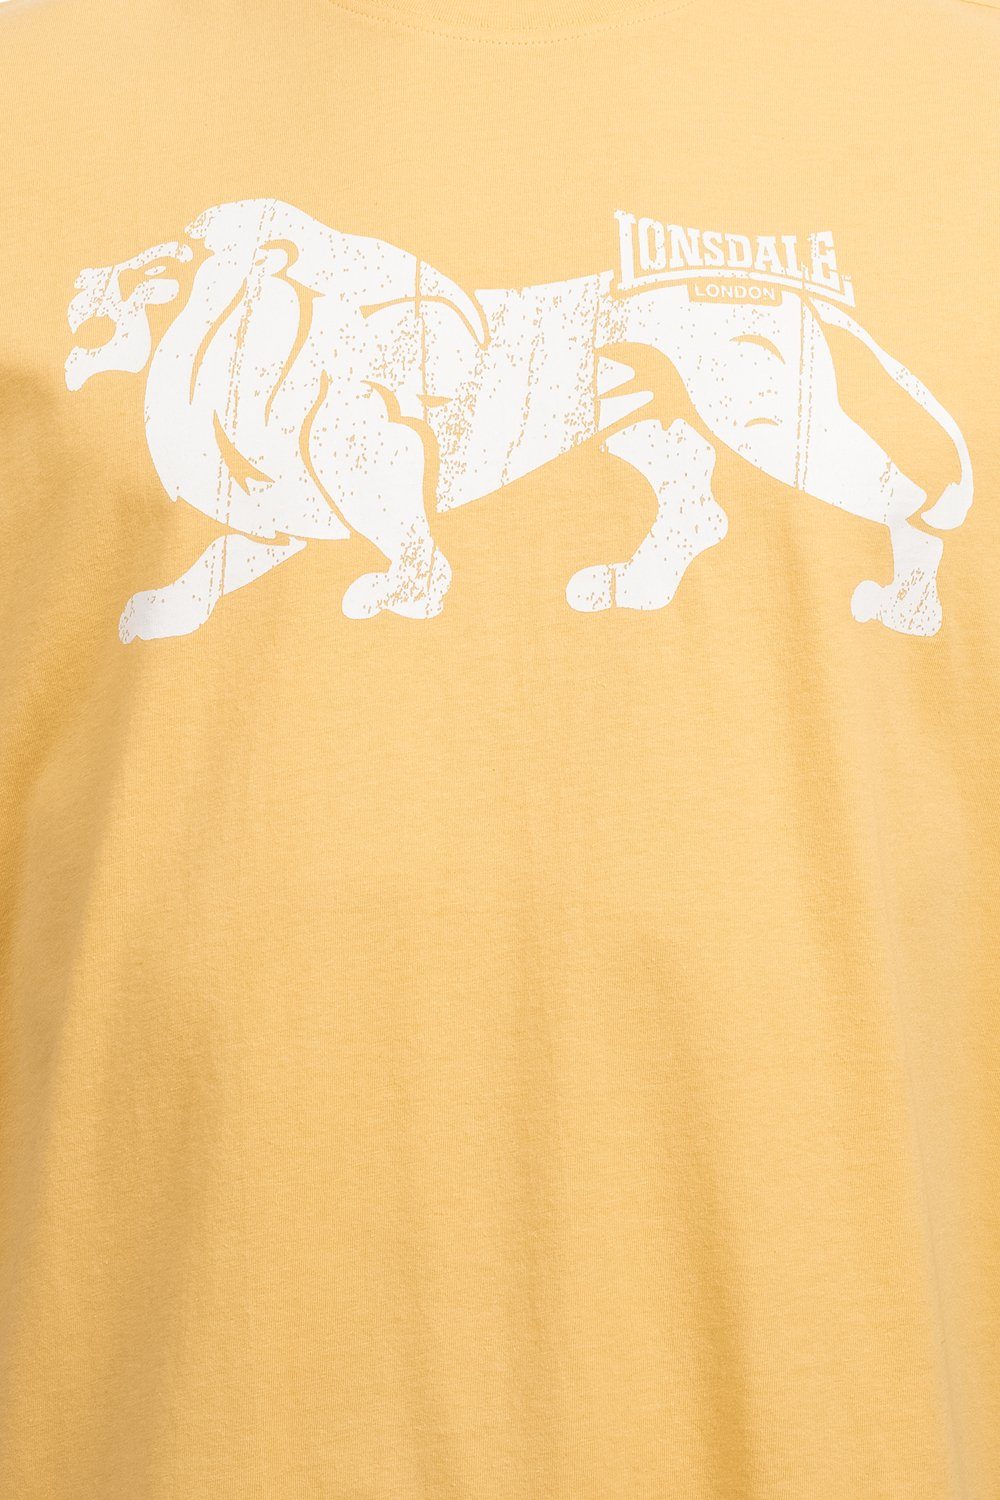 ENDMOOR T-Shirt Yellow/White Lonsdale Pastel